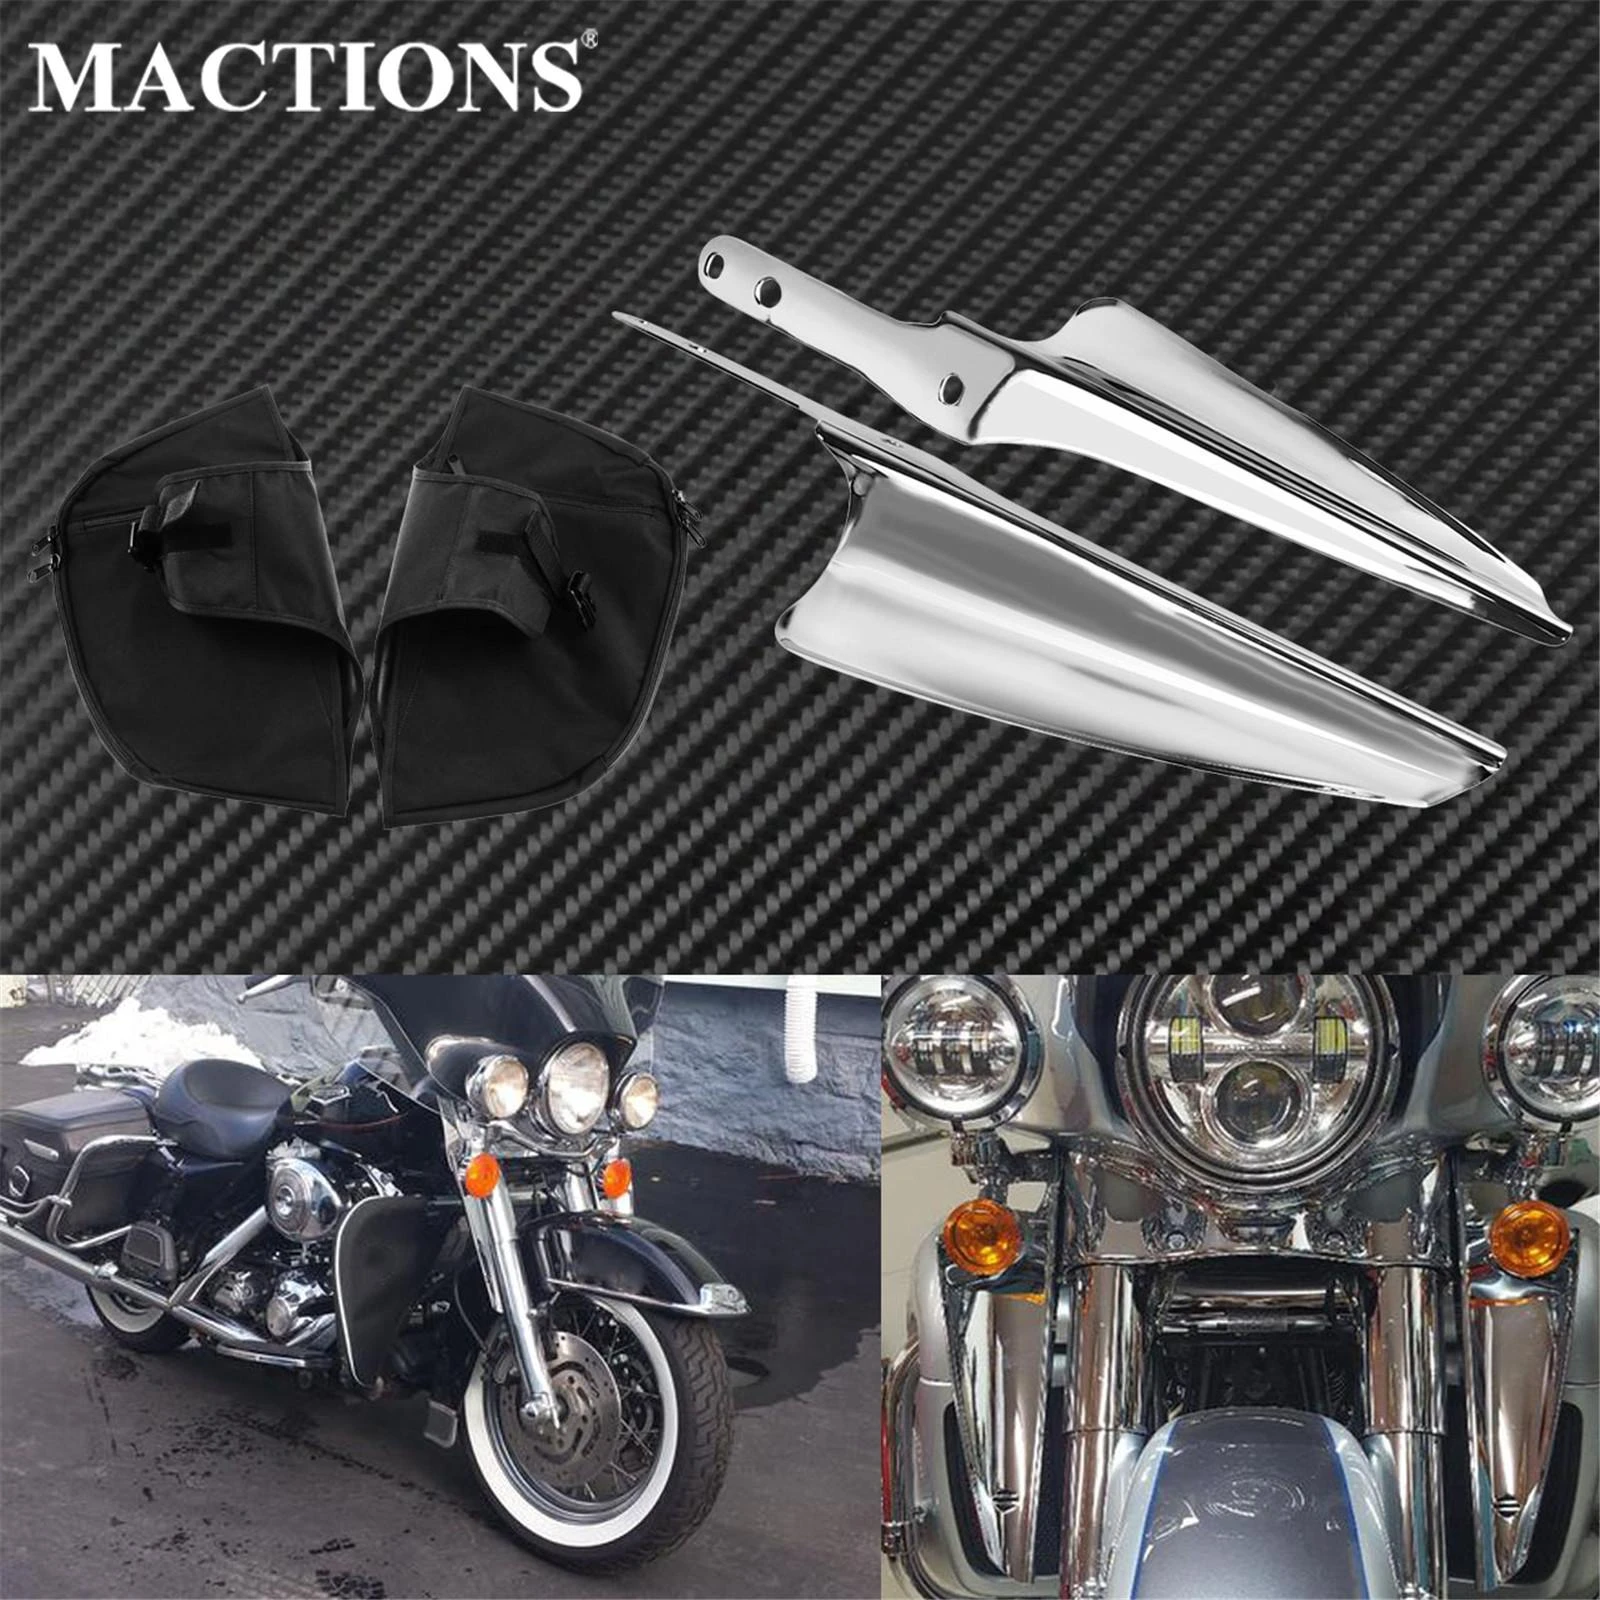 Harley Davidson Touring Soft Lower Fairing Covers/ Elephant Ears/Leg Warmers